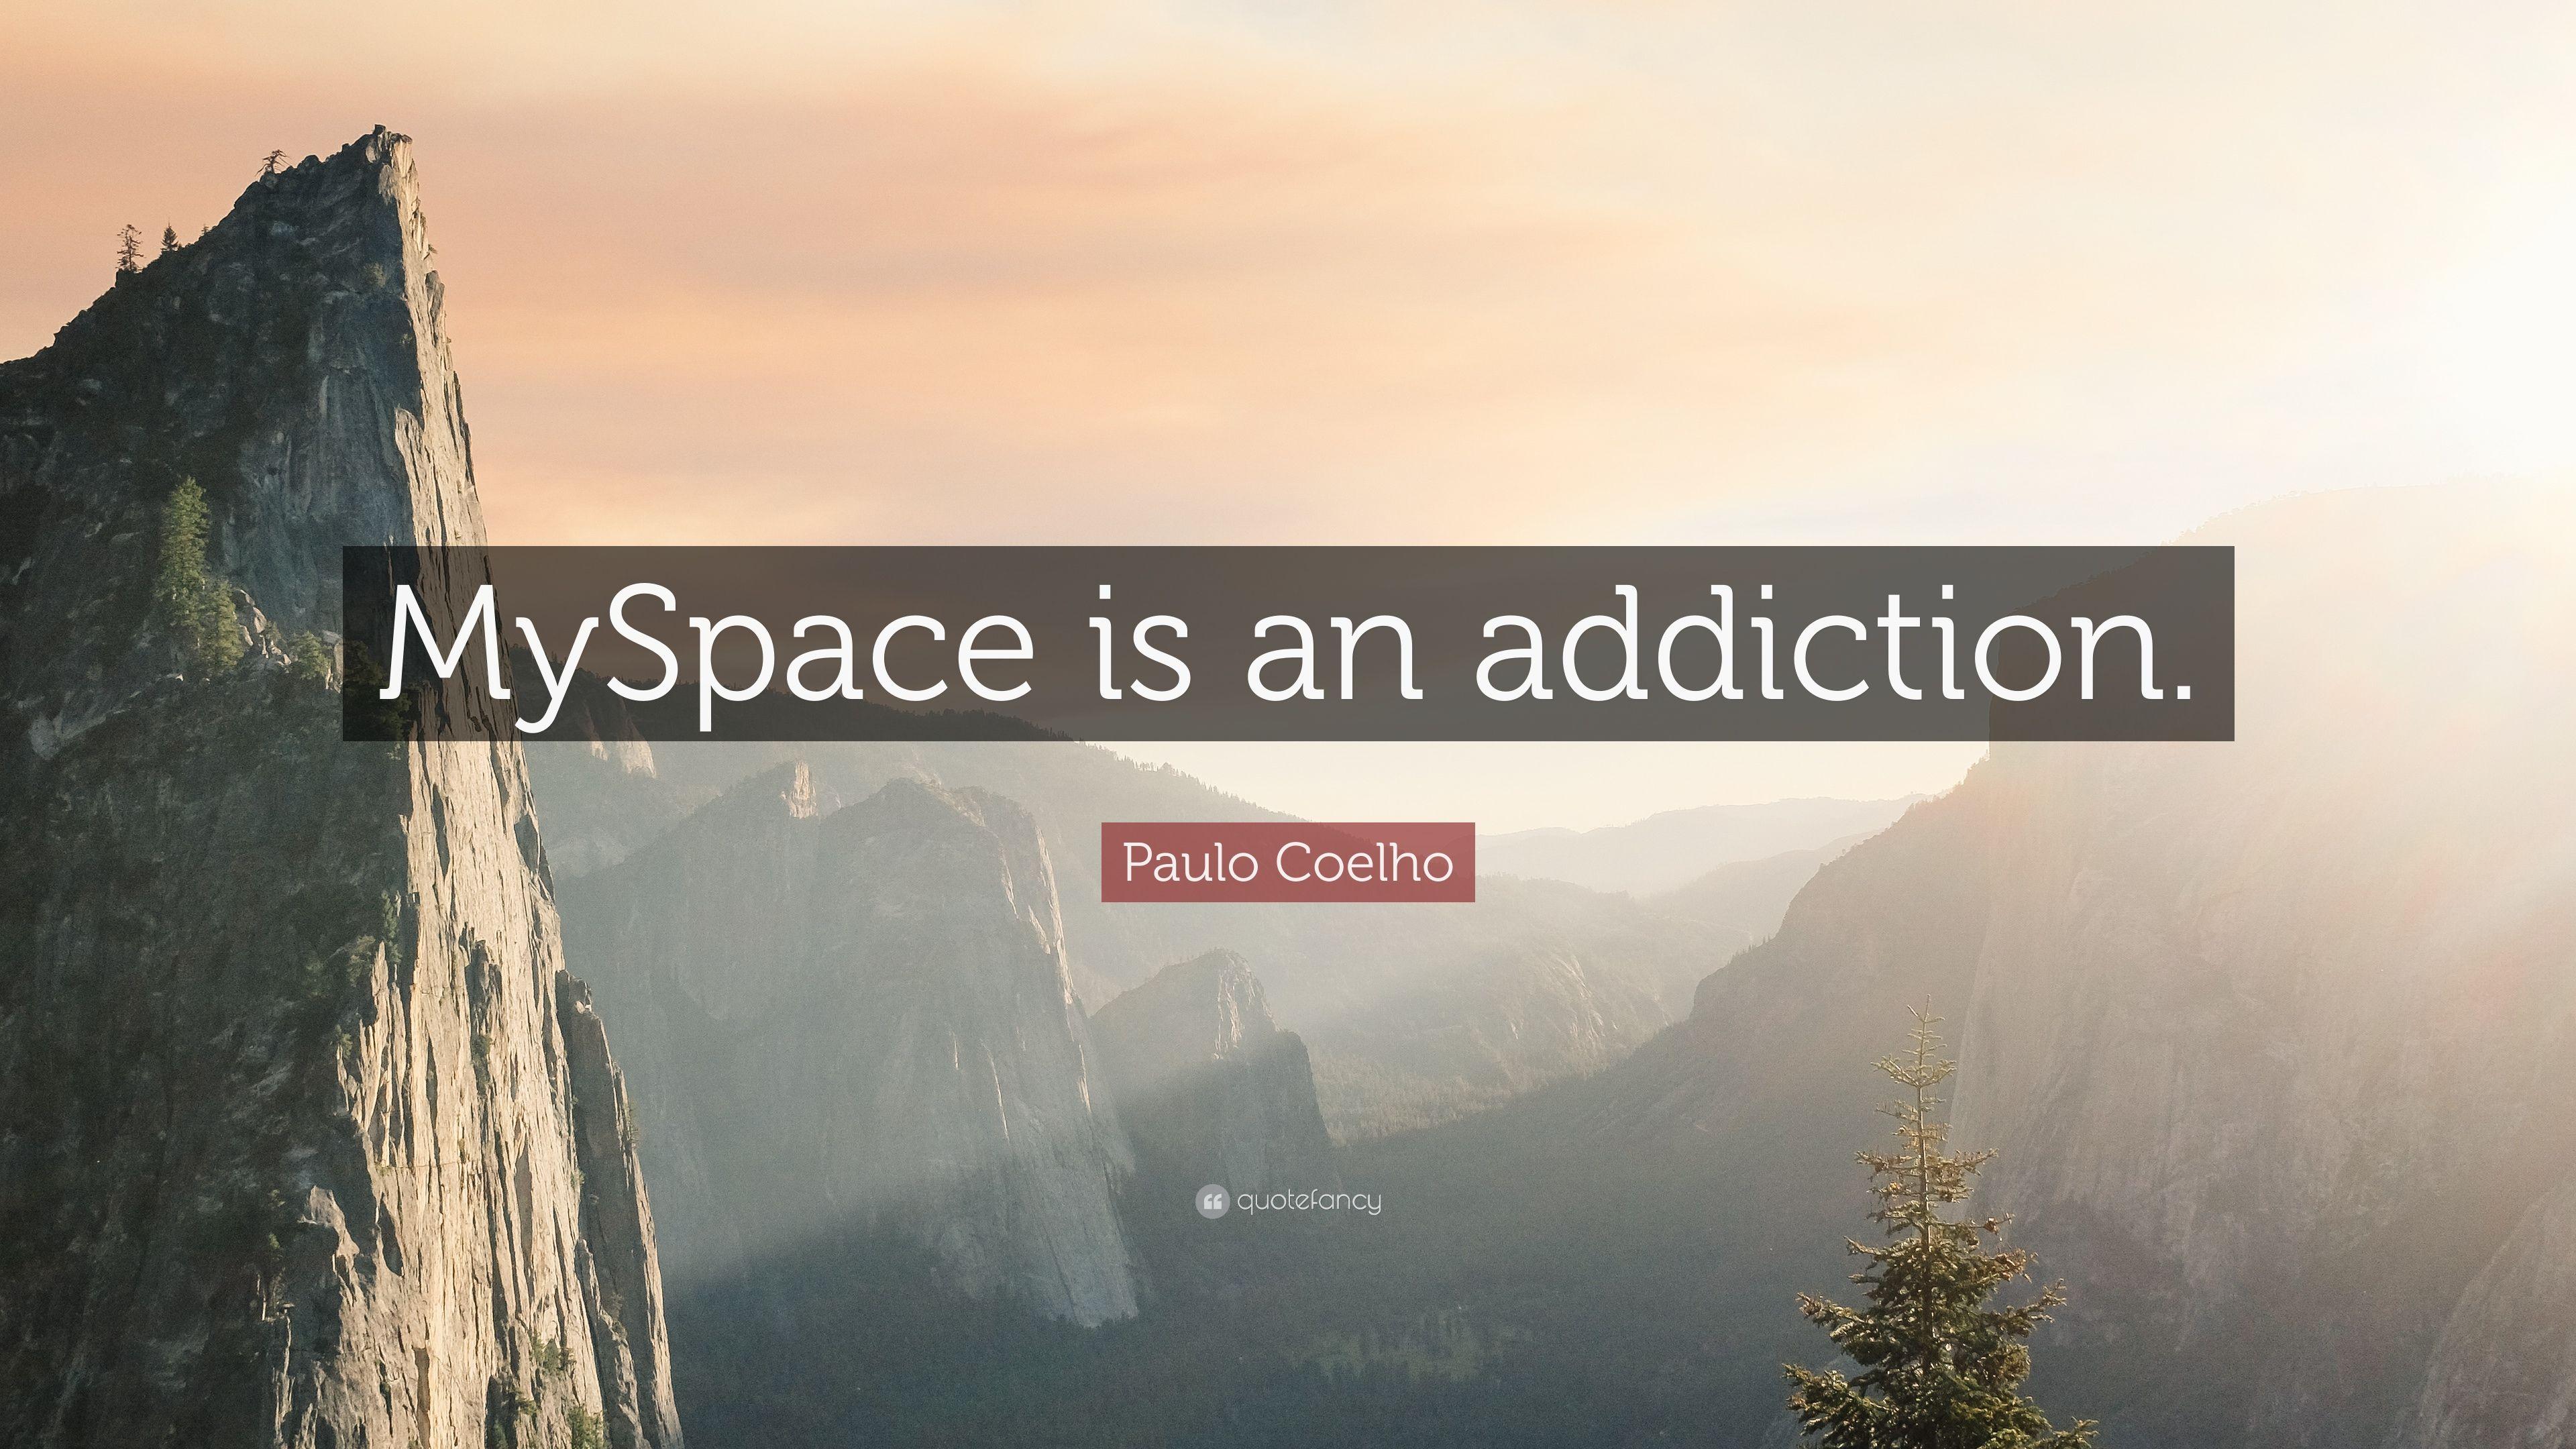 Paulo Coelho Quote: “MySpace is an addiction.” 7 wallpaper